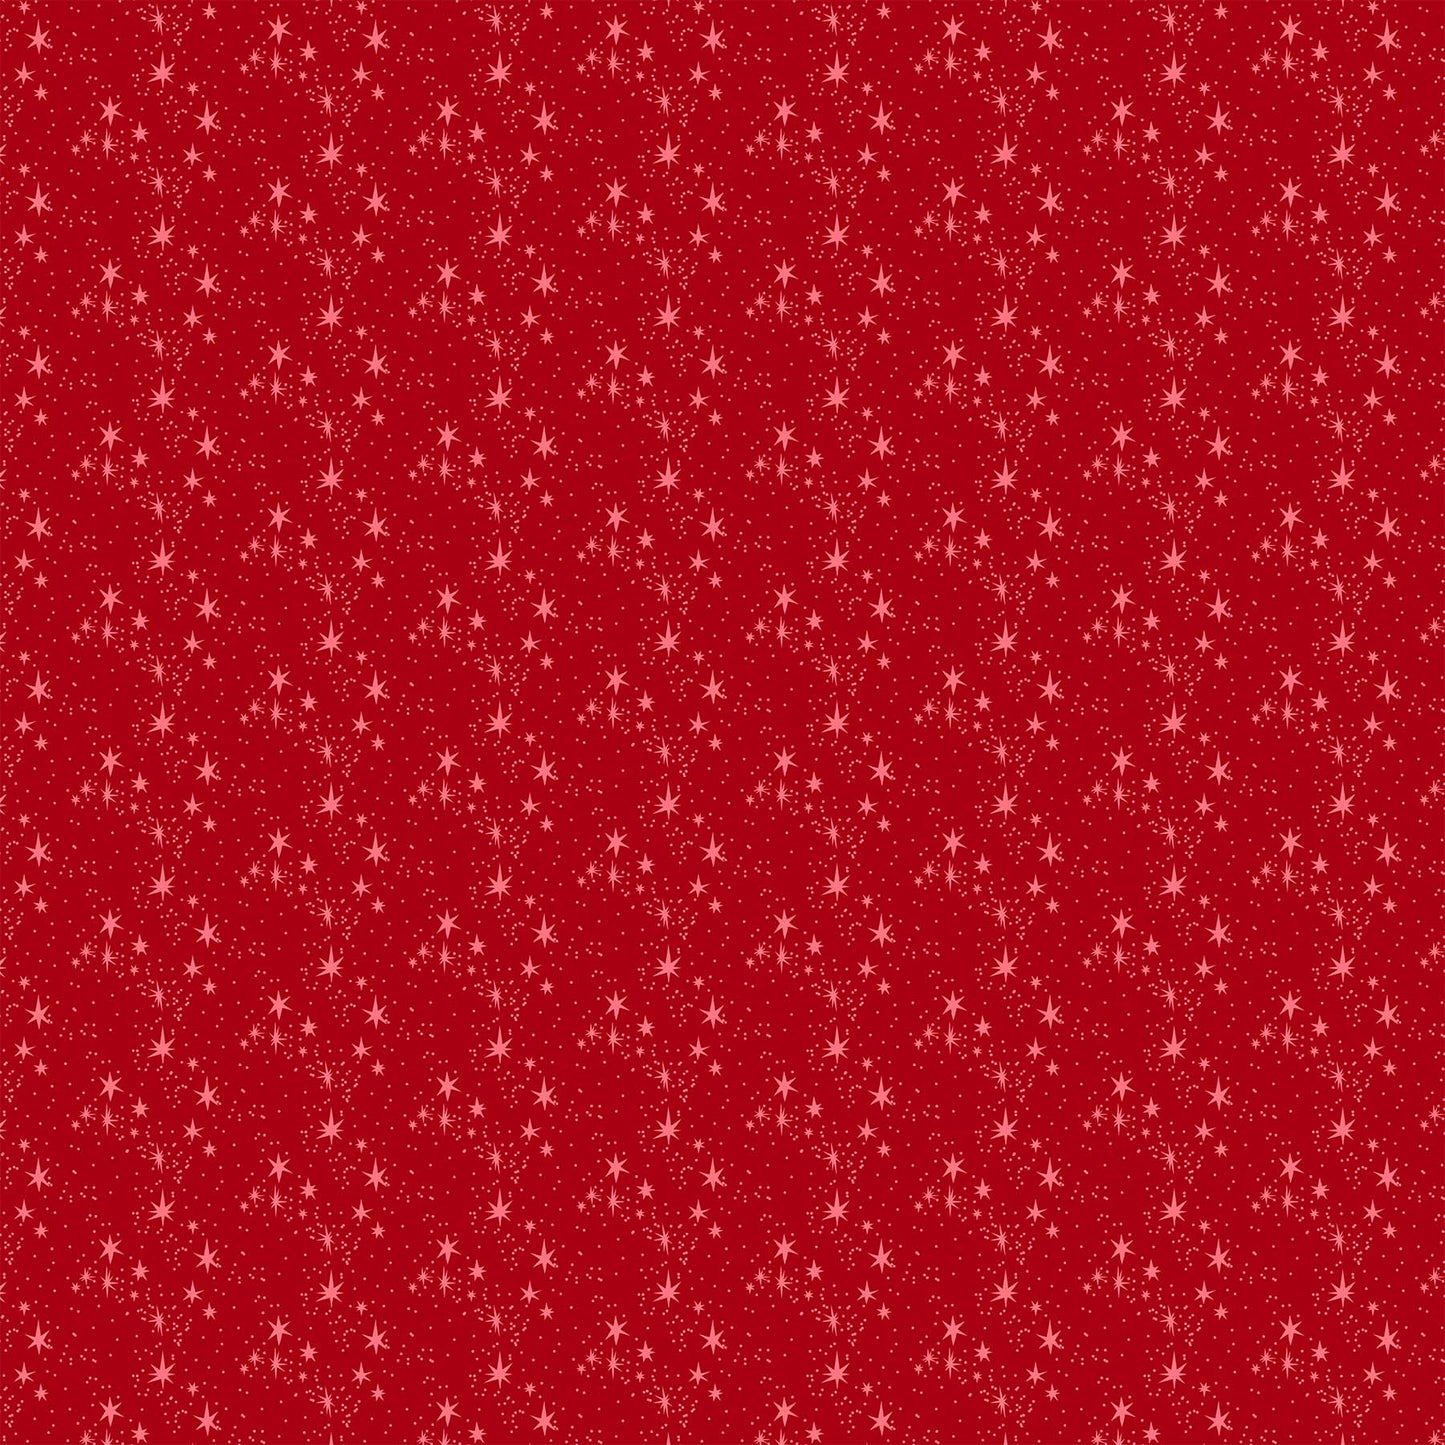 Red Stars - Merry Kitschmas by Louise Pretzel